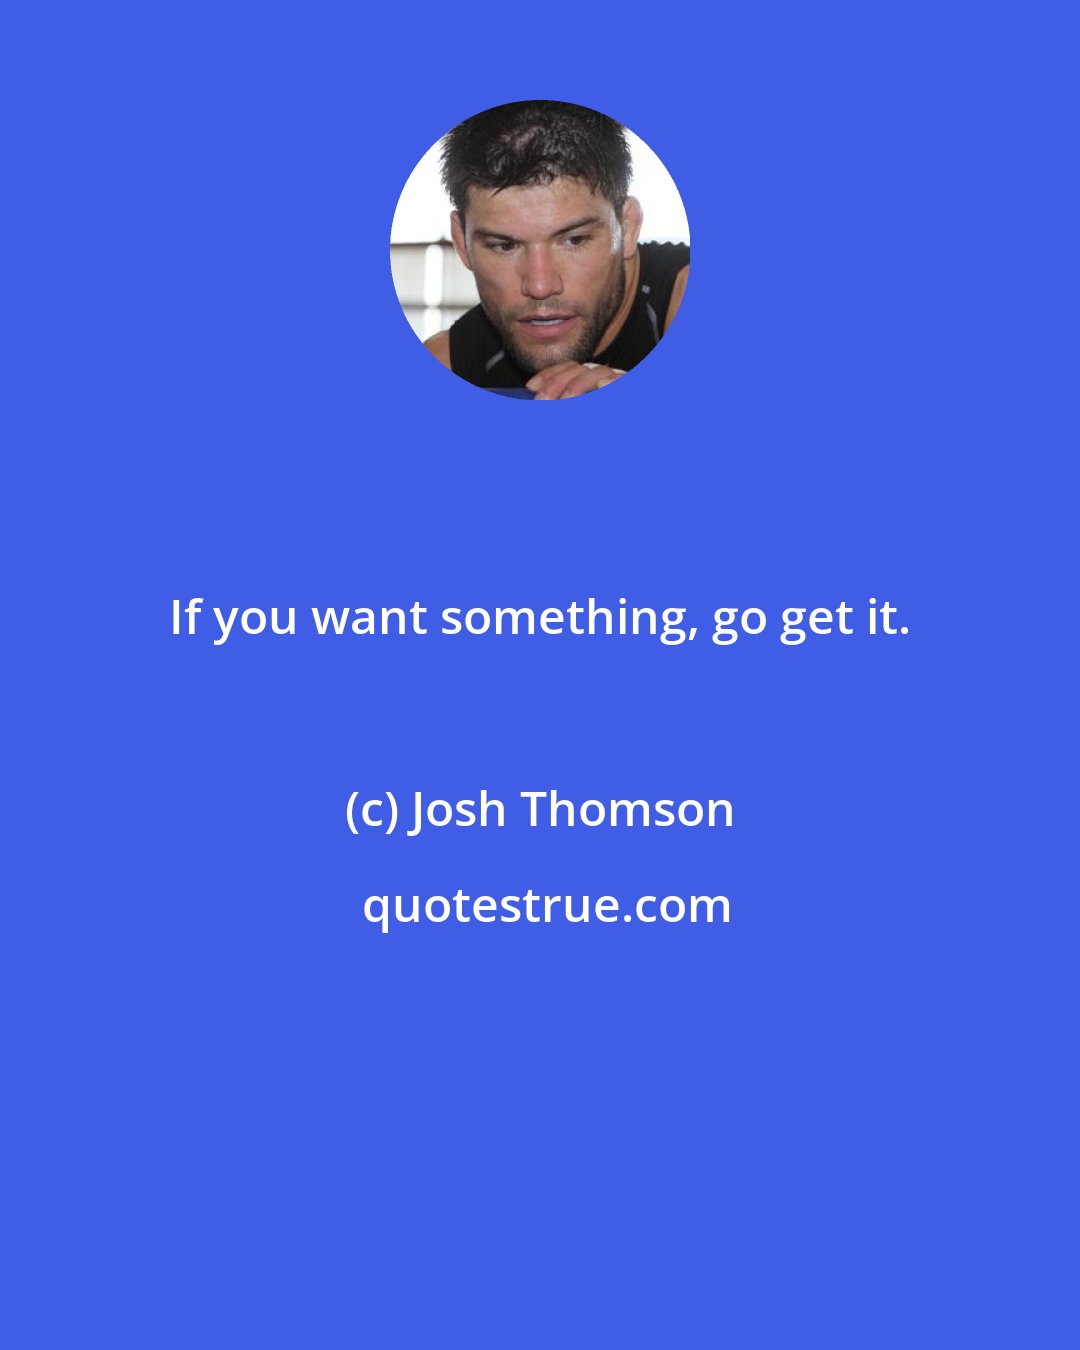 Josh Thomson: If you want something, go get it.